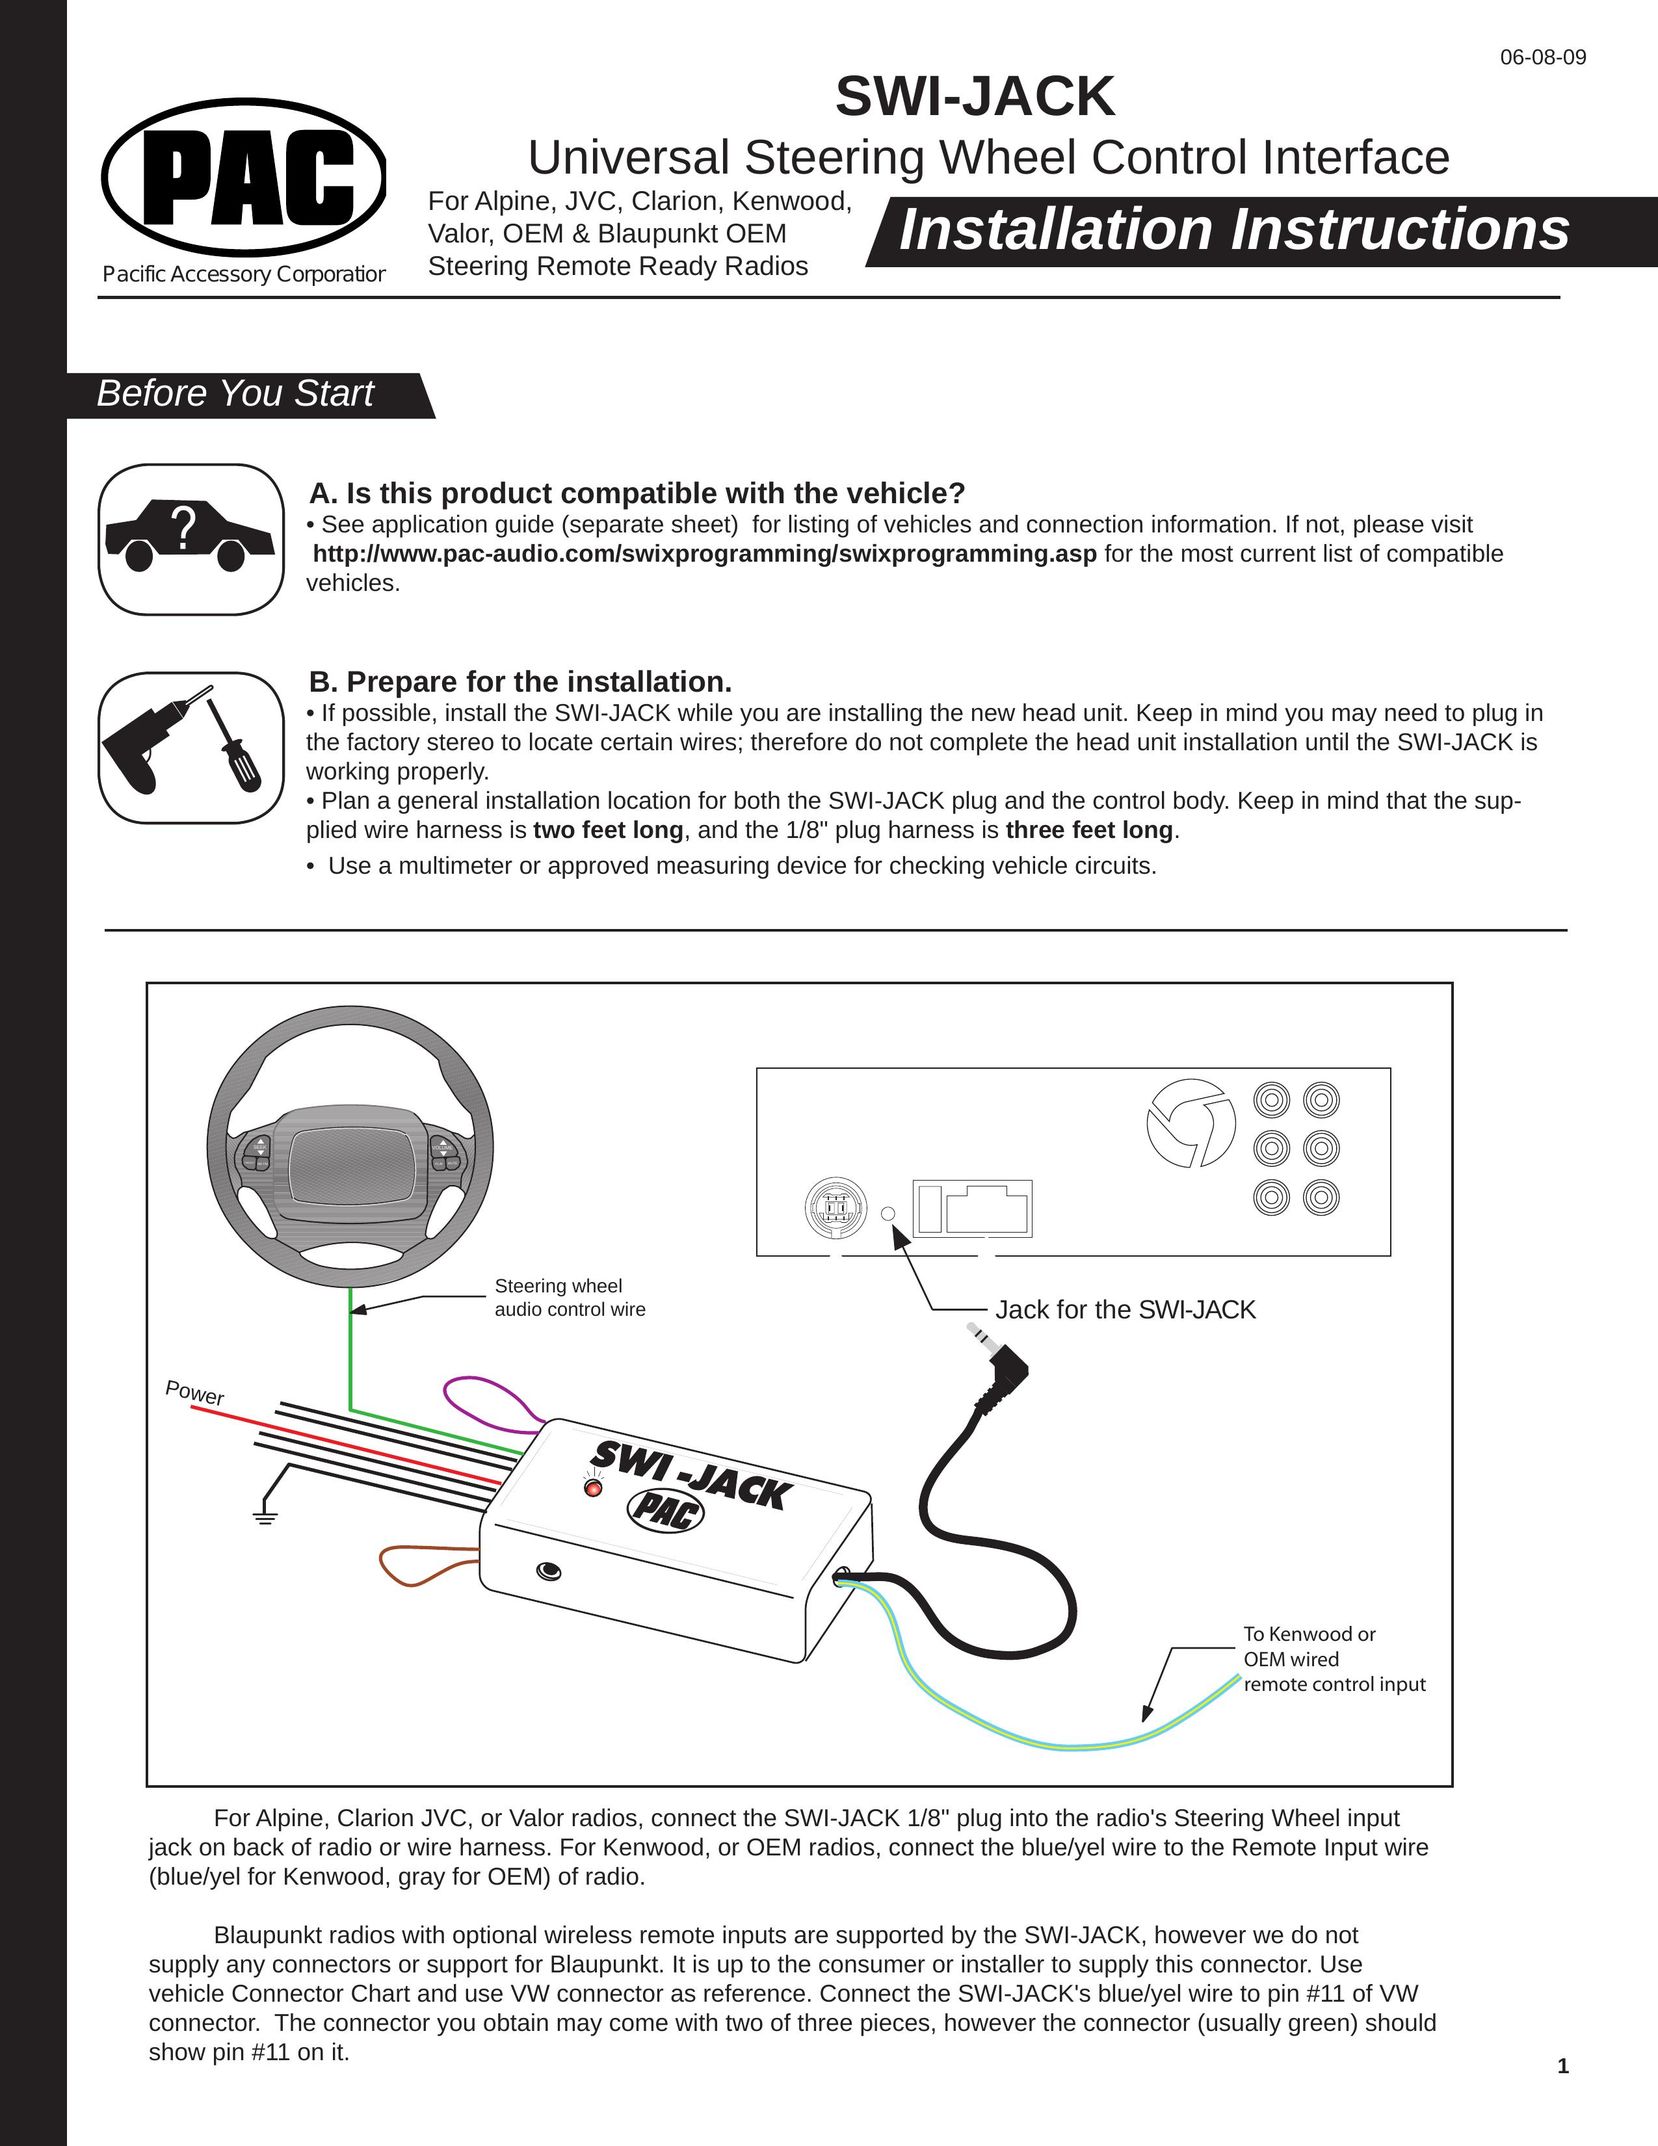 PAC SWI-JACK Car Stereo System User Manual